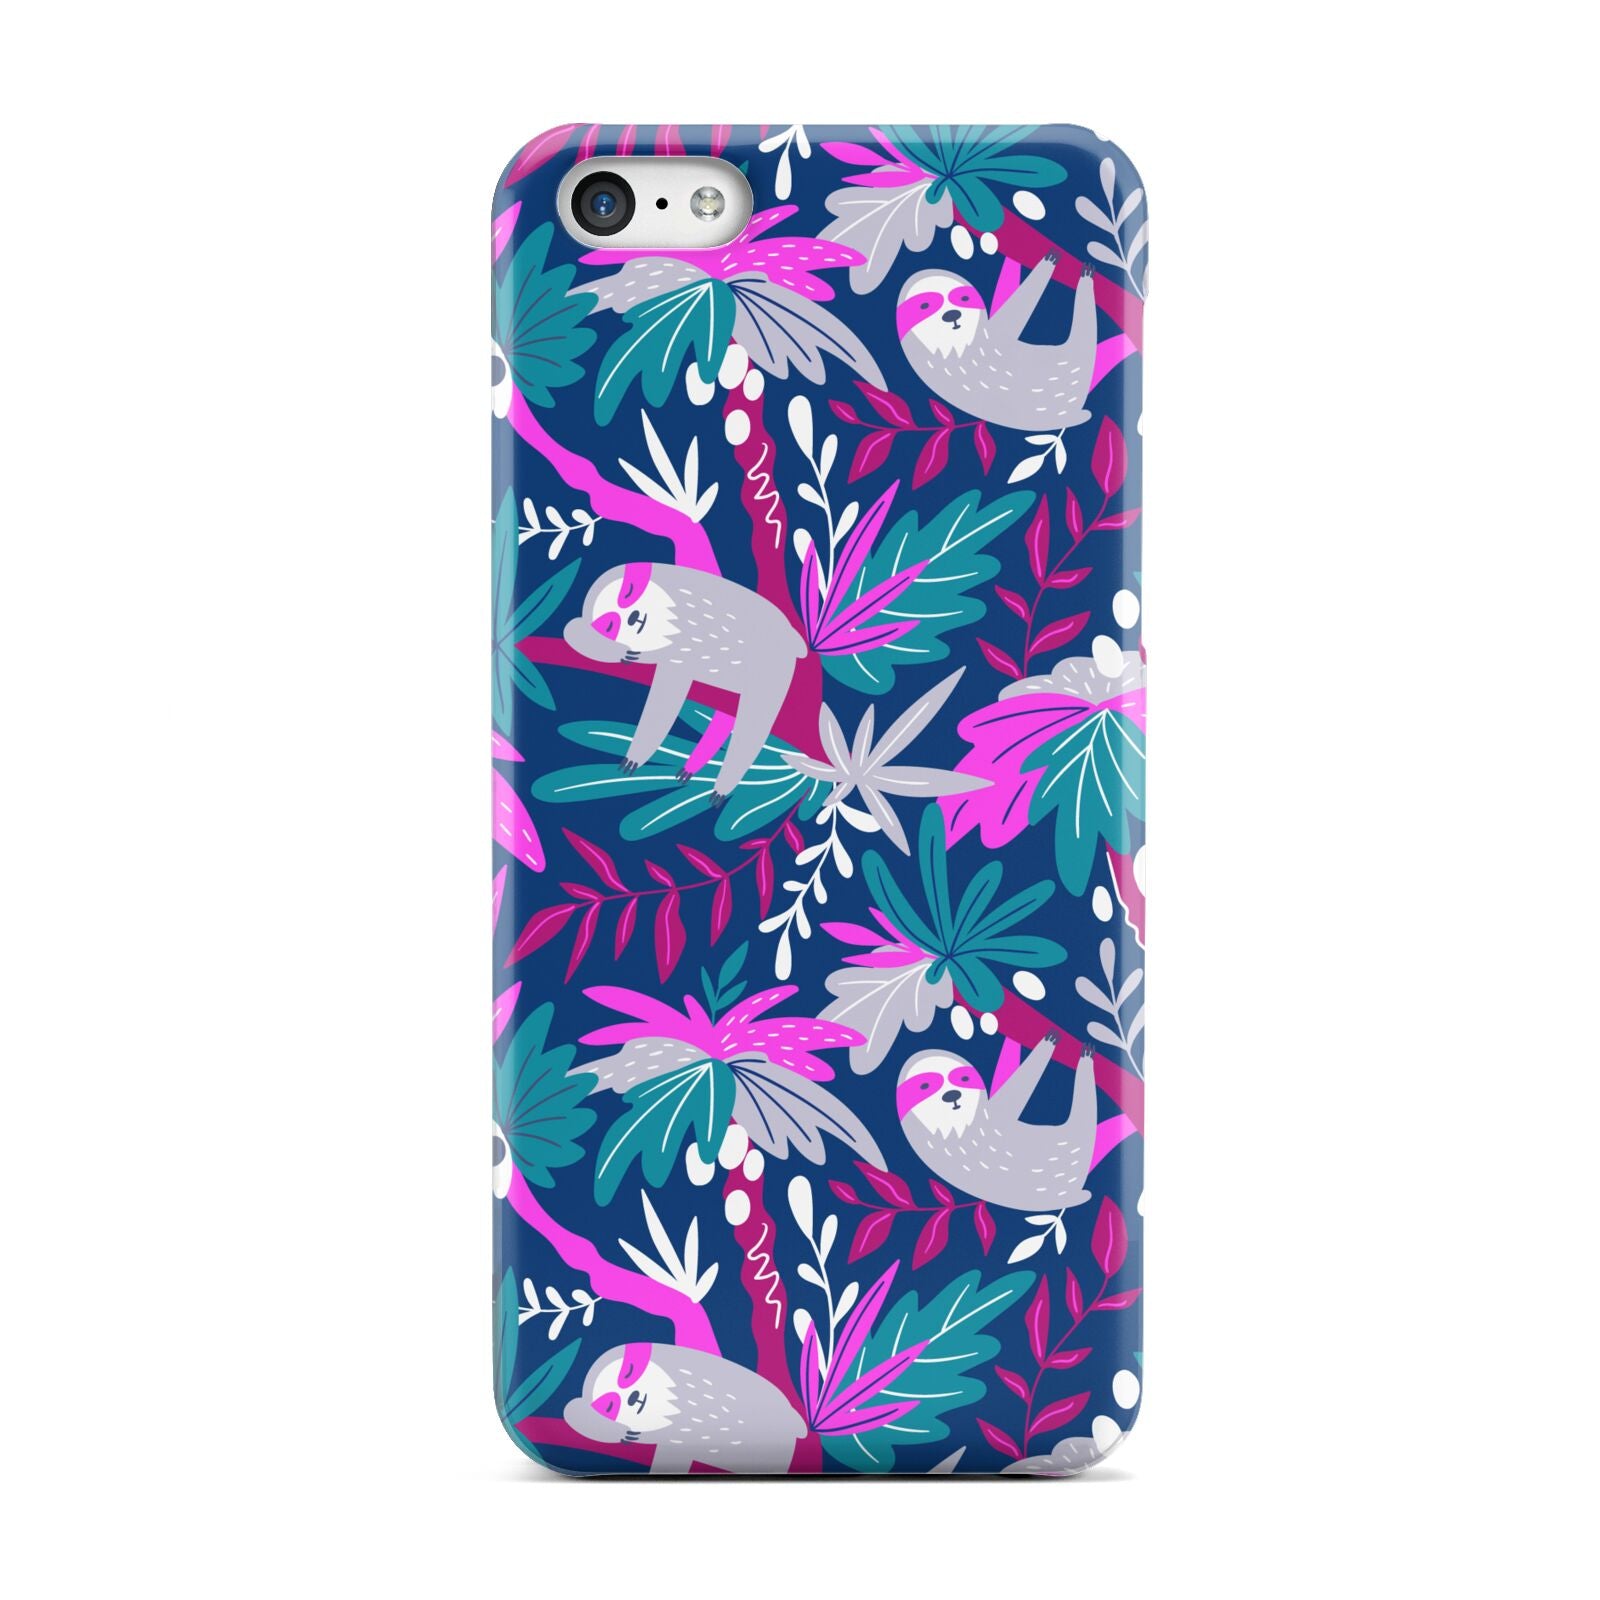 Sloth Apple iPhone 5c Case